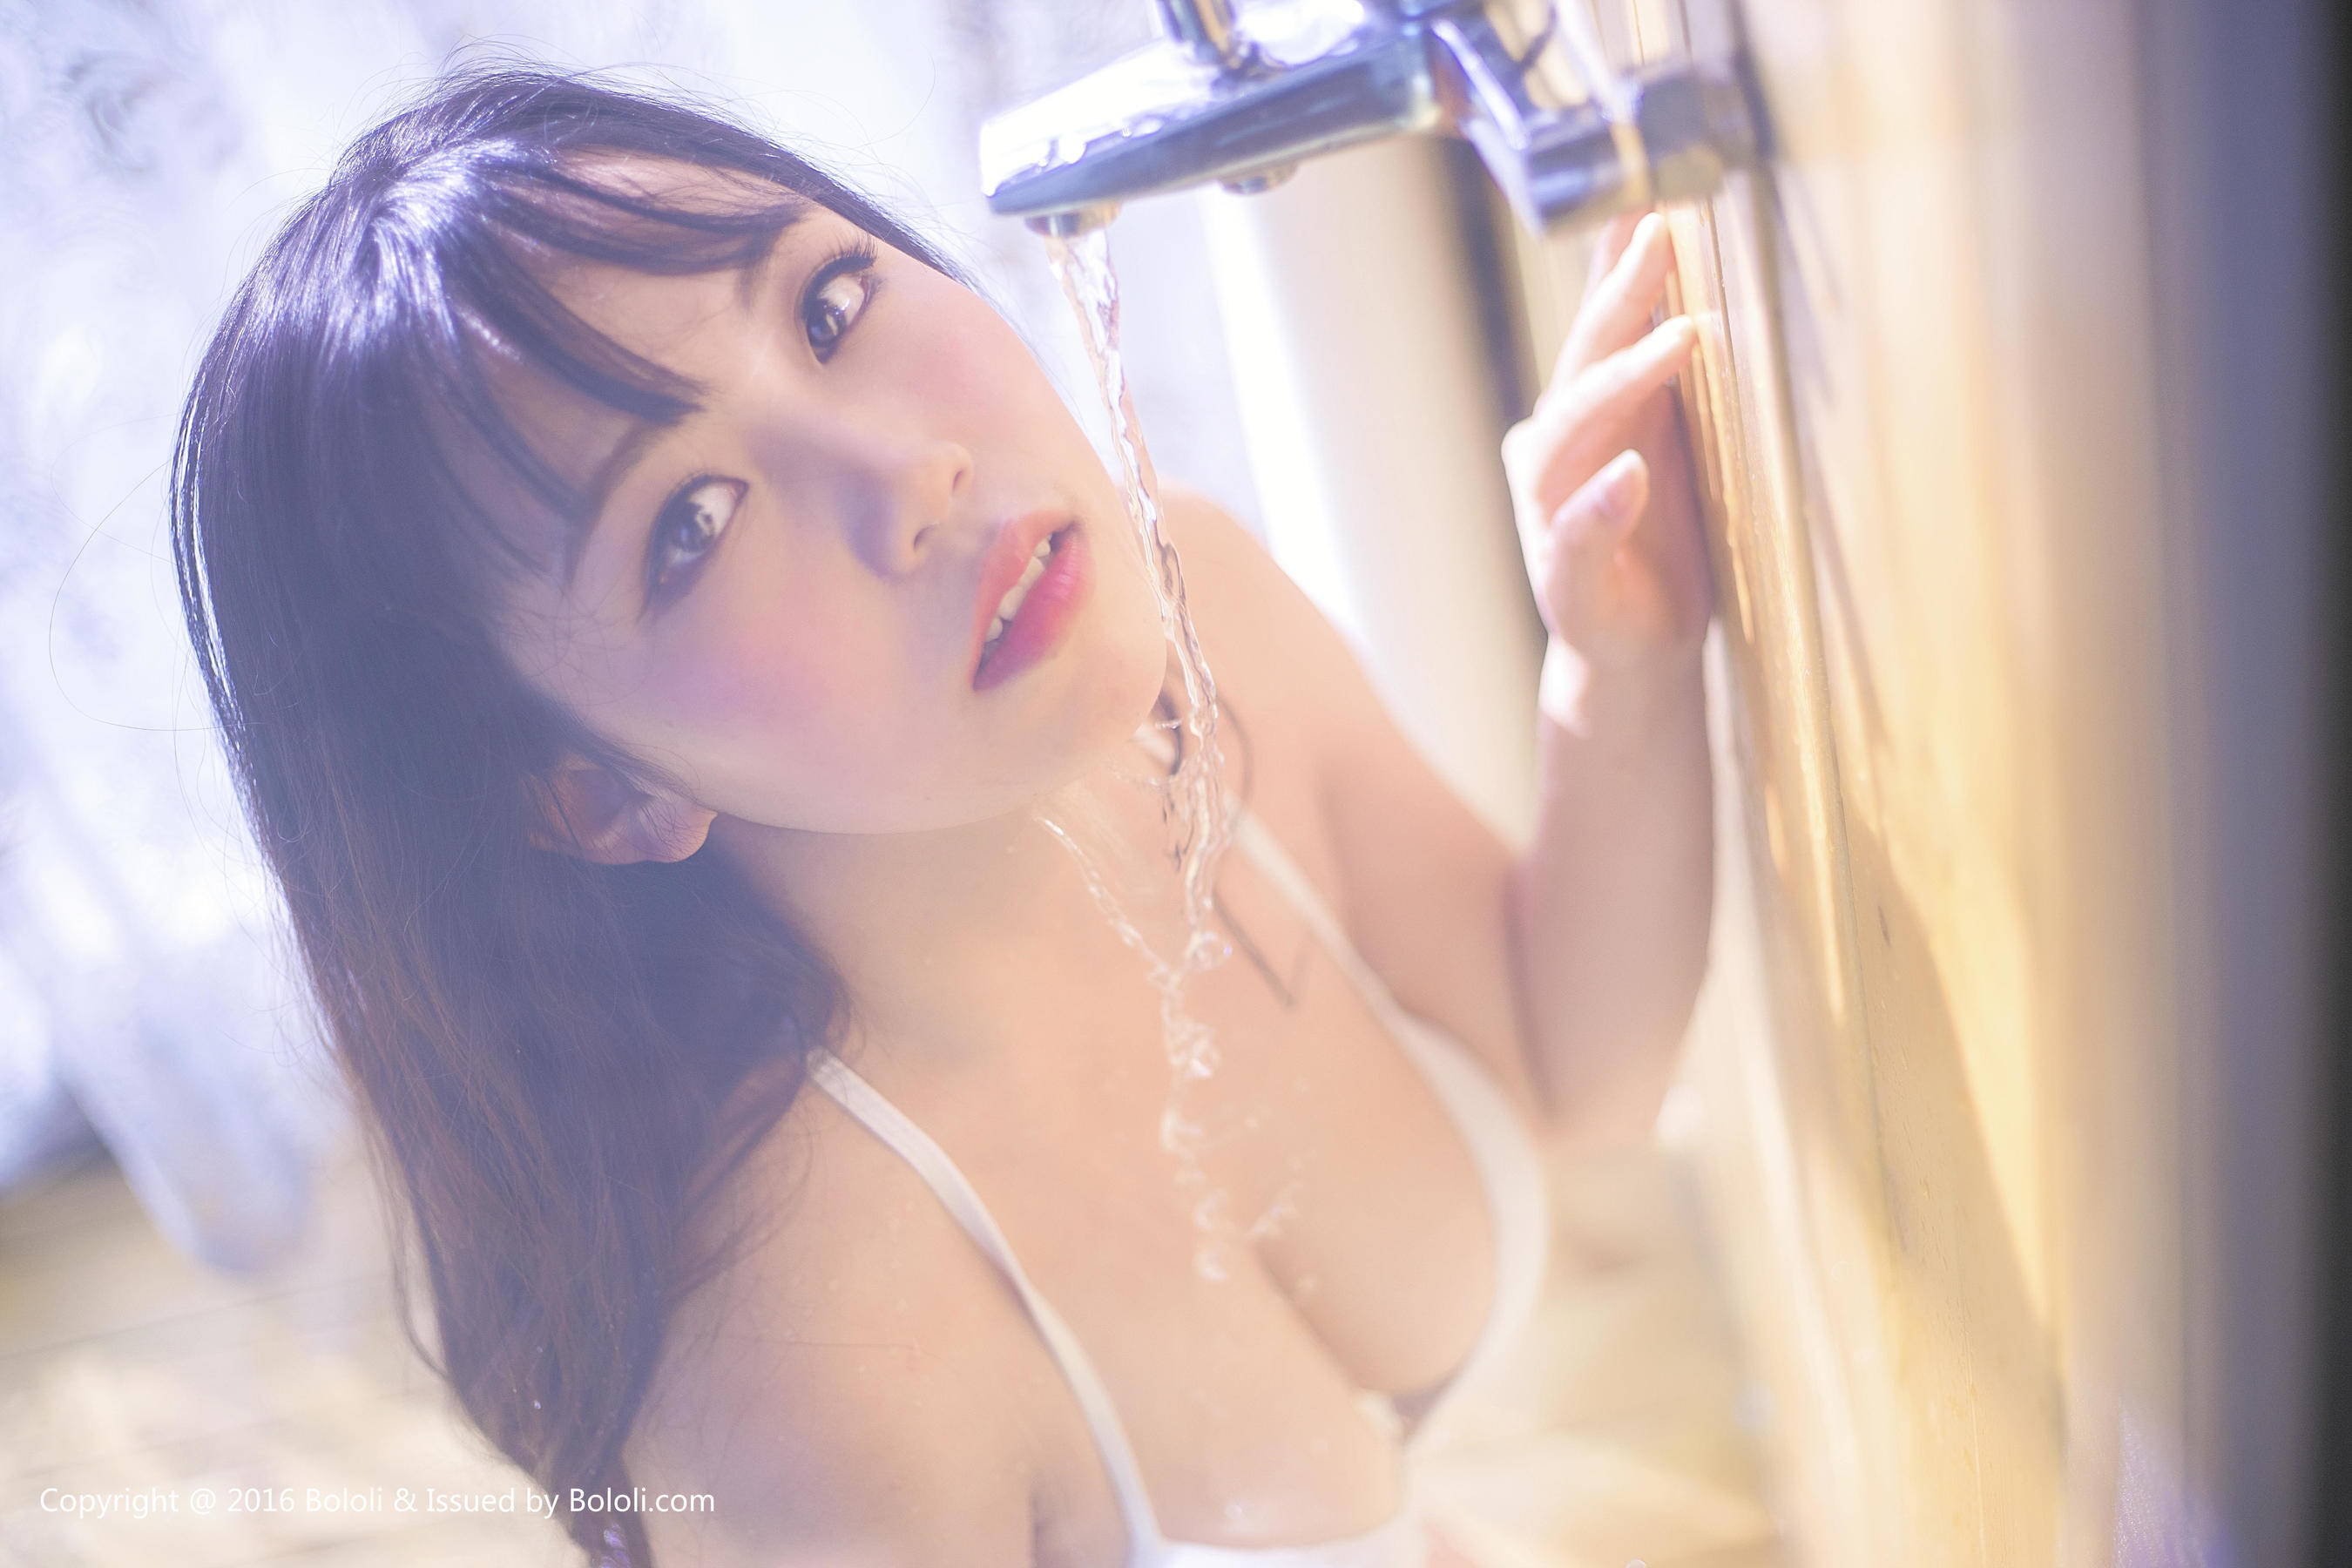 Masaoko “Big Breasts and Fat Hips” [Bololi Polo Club] BOL.033 Photo Album